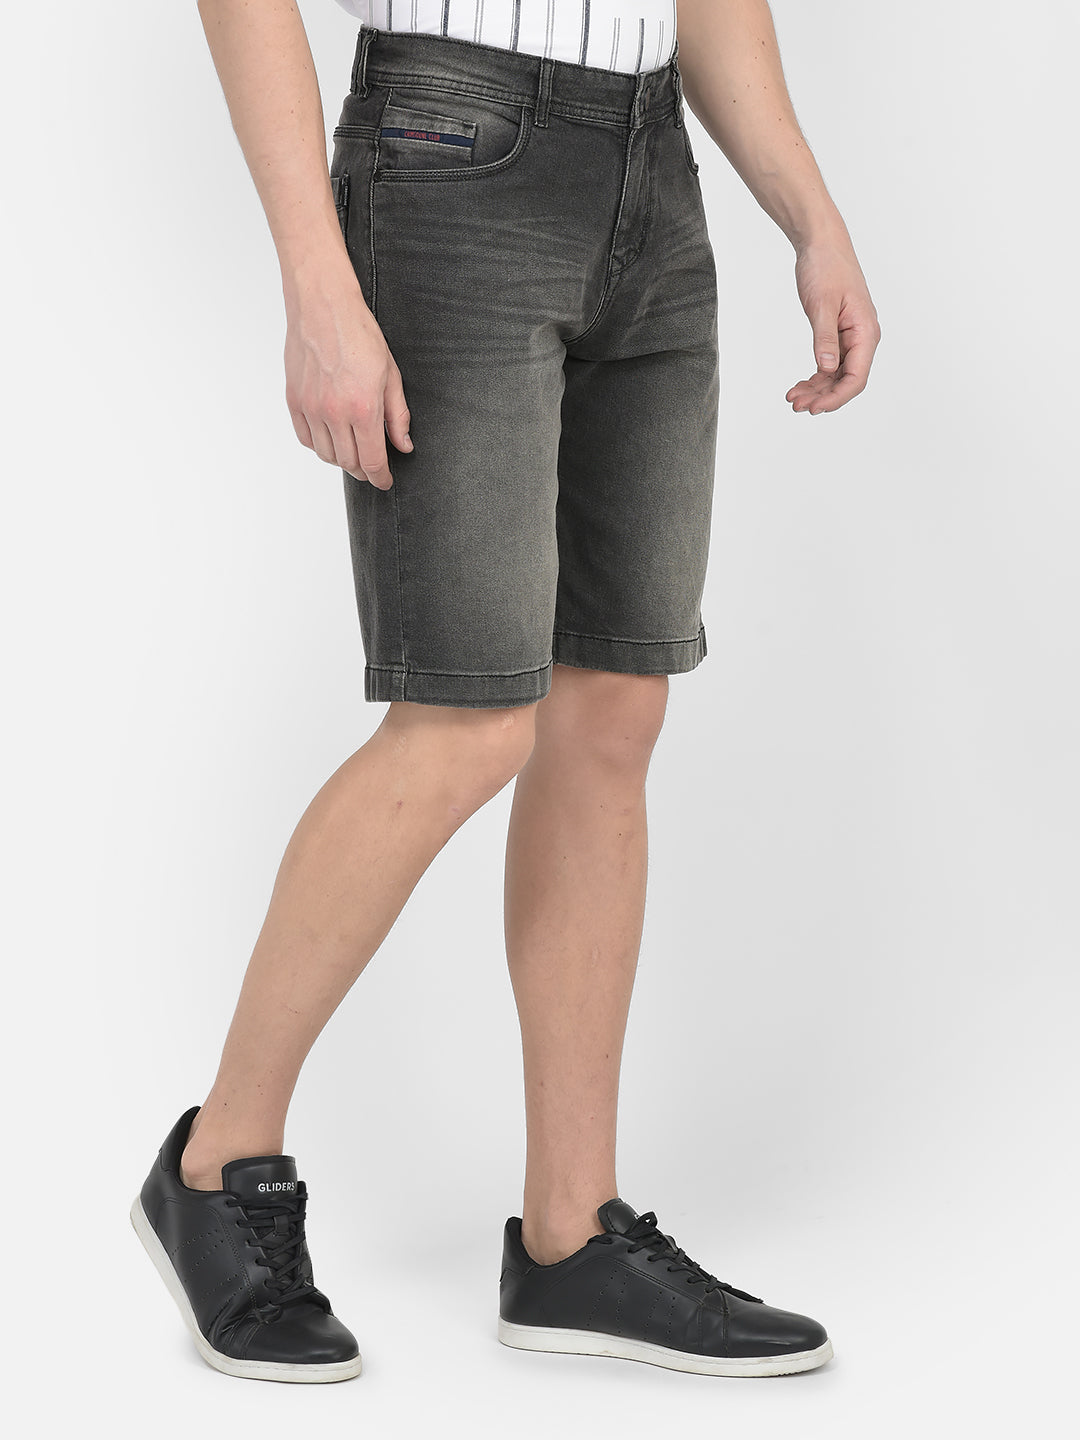 Grey Heavy-Wash Denim Shorts